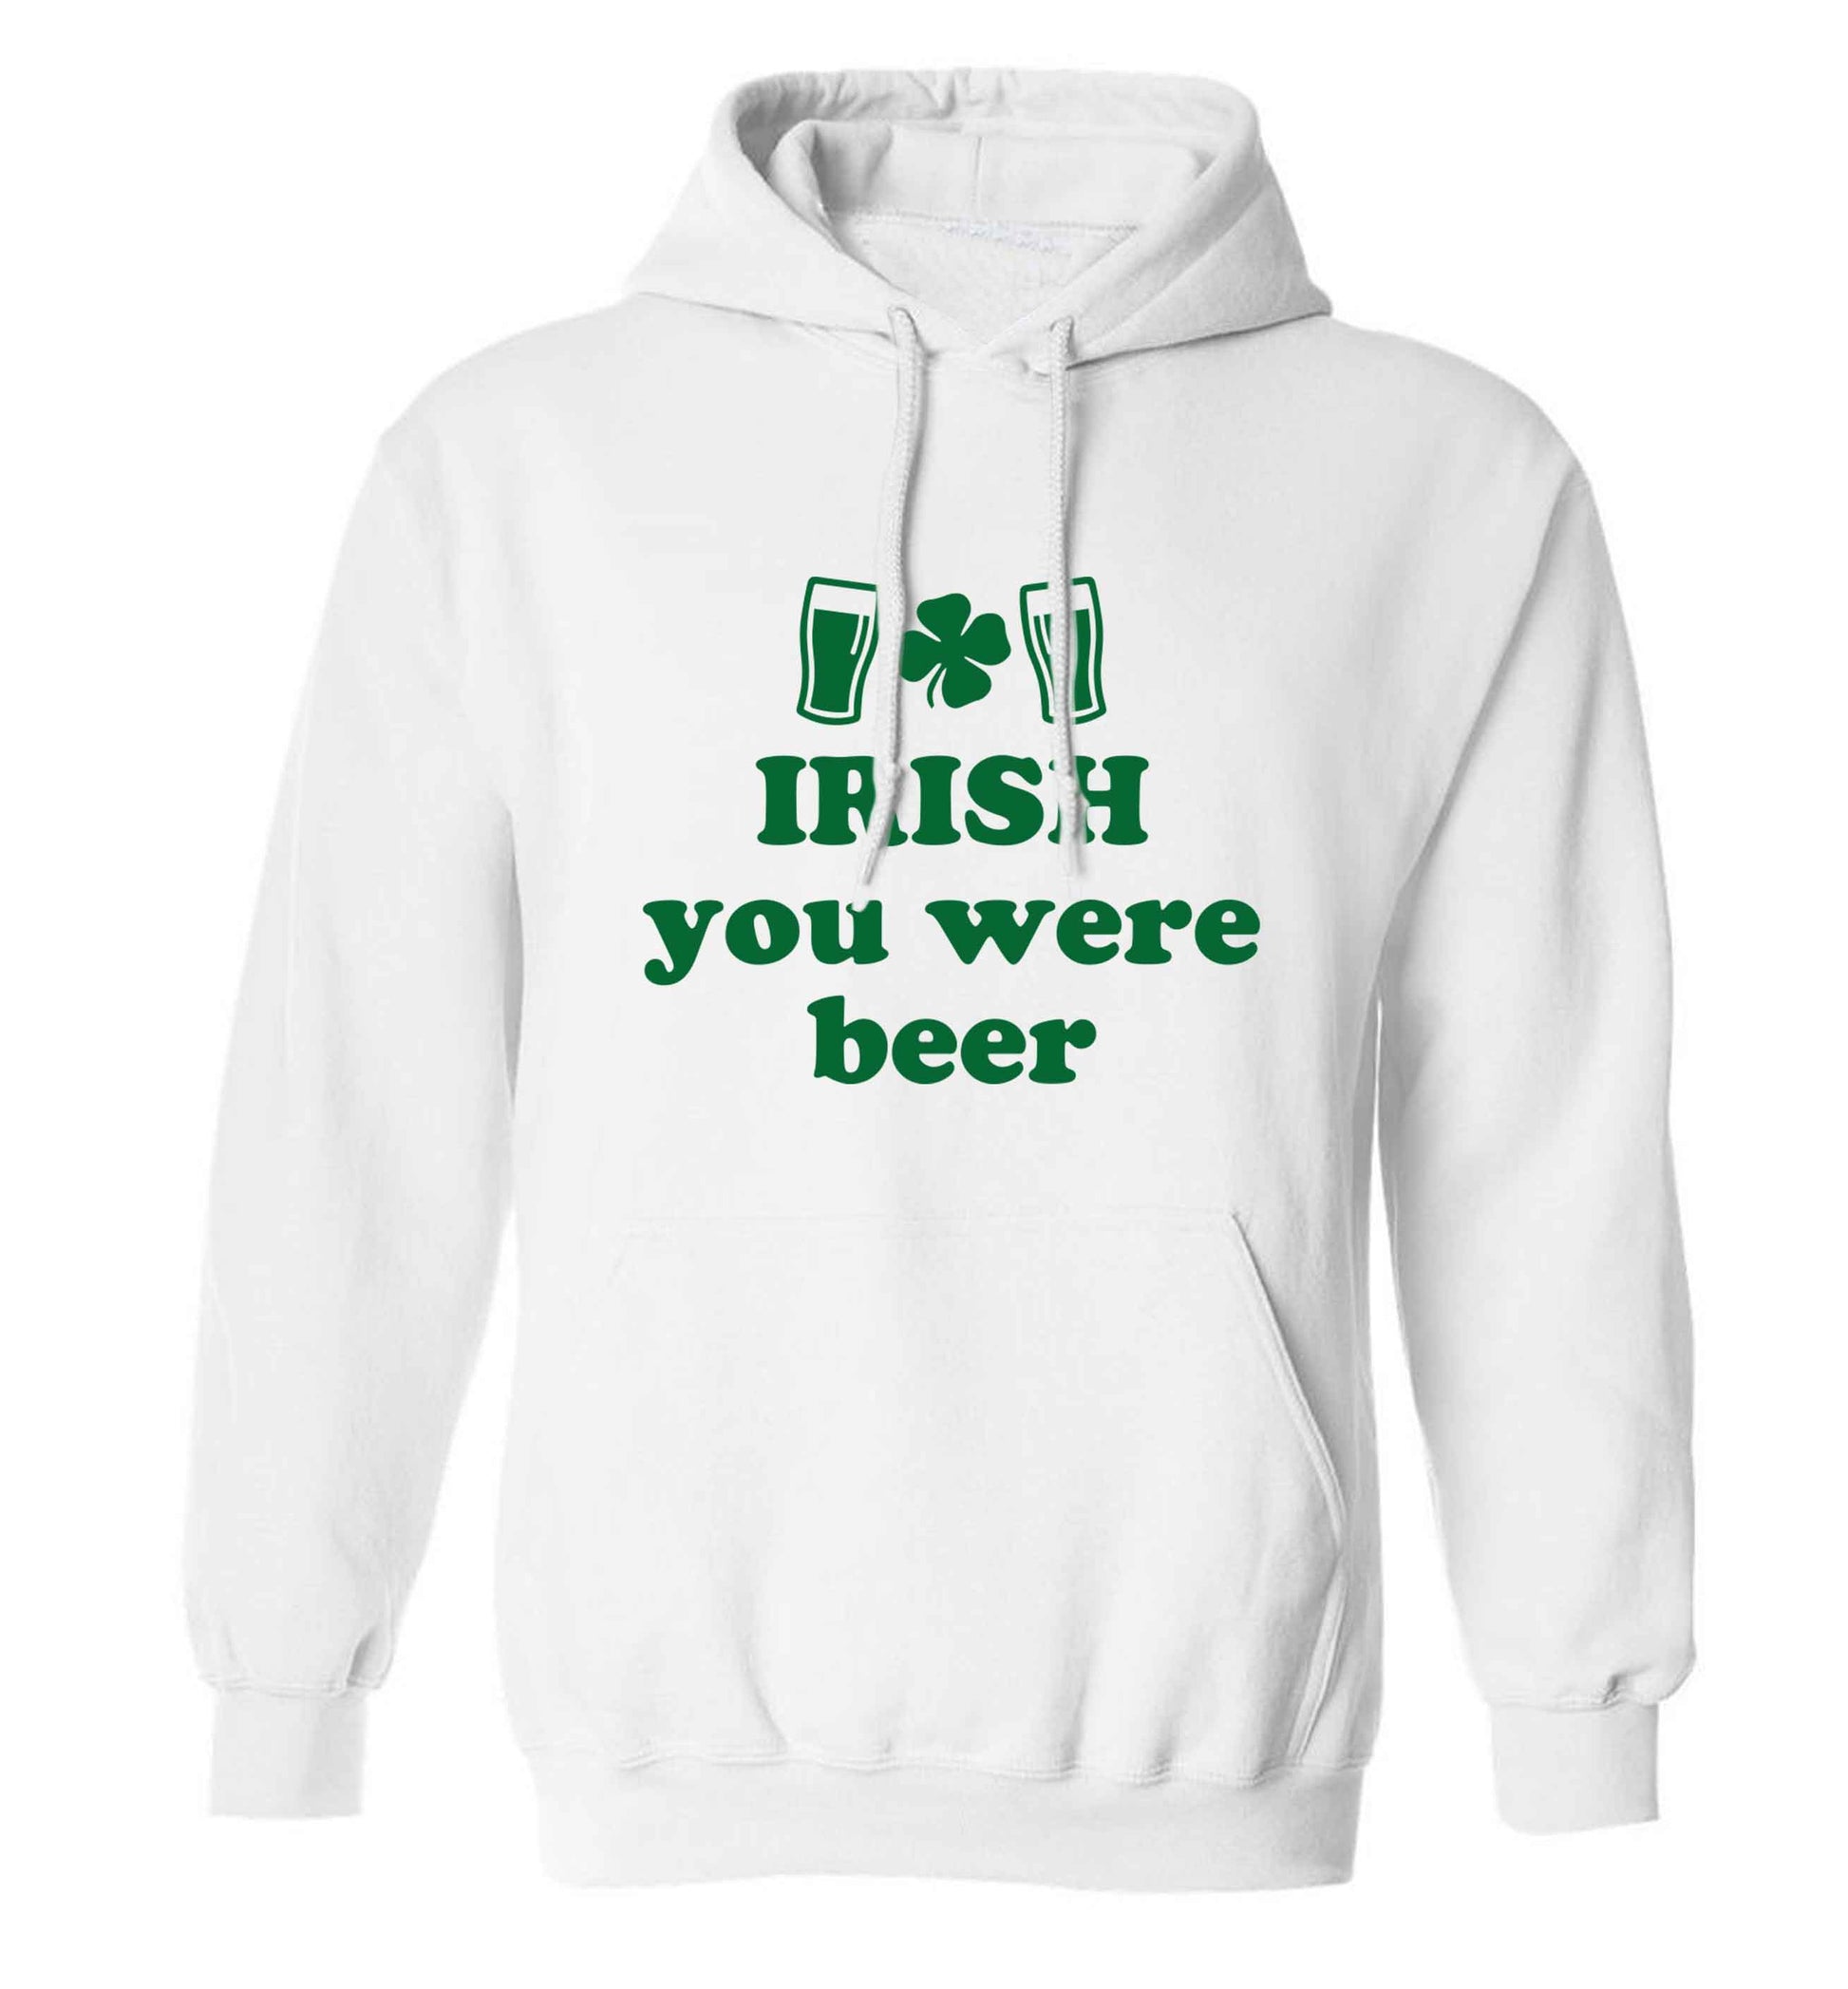 Irish you were beer adults unisex white hoodie 2XL